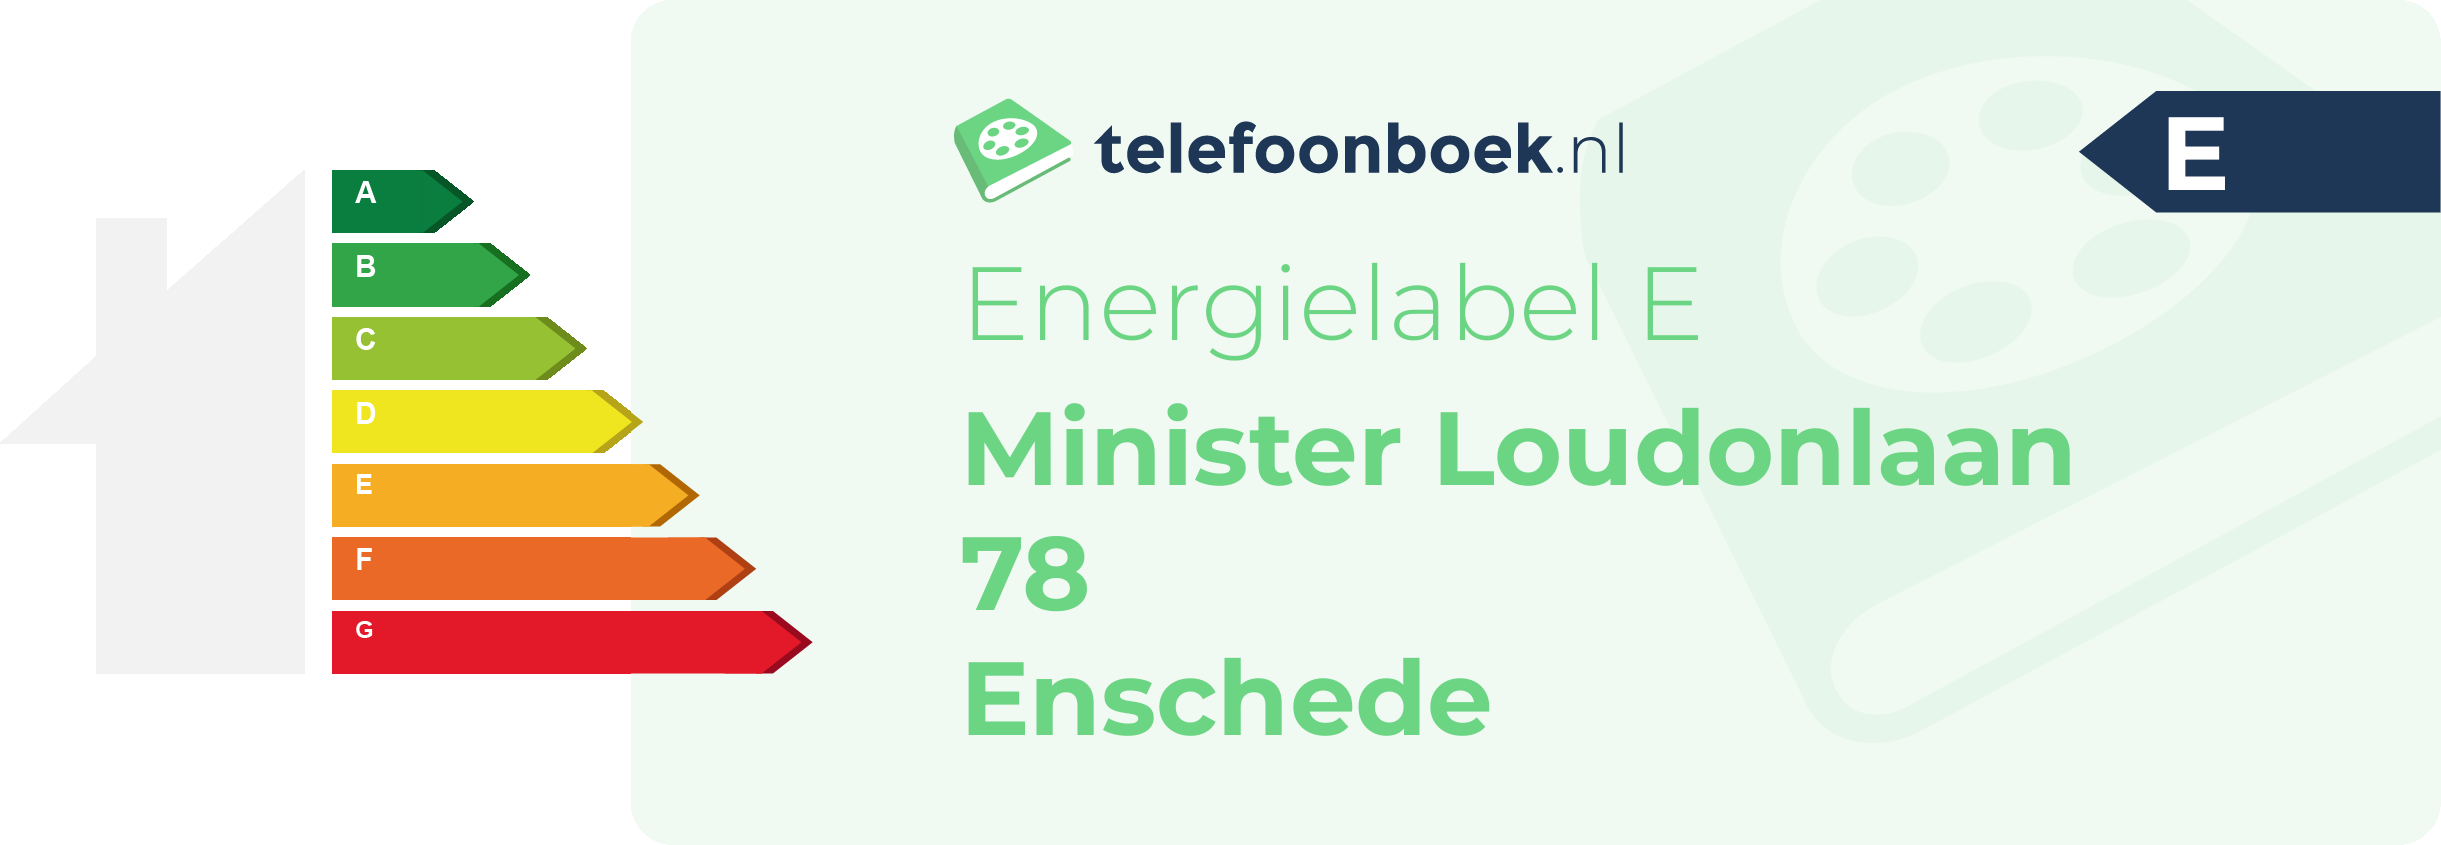 Energielabel Minister Loudonlaan 78 Enschede